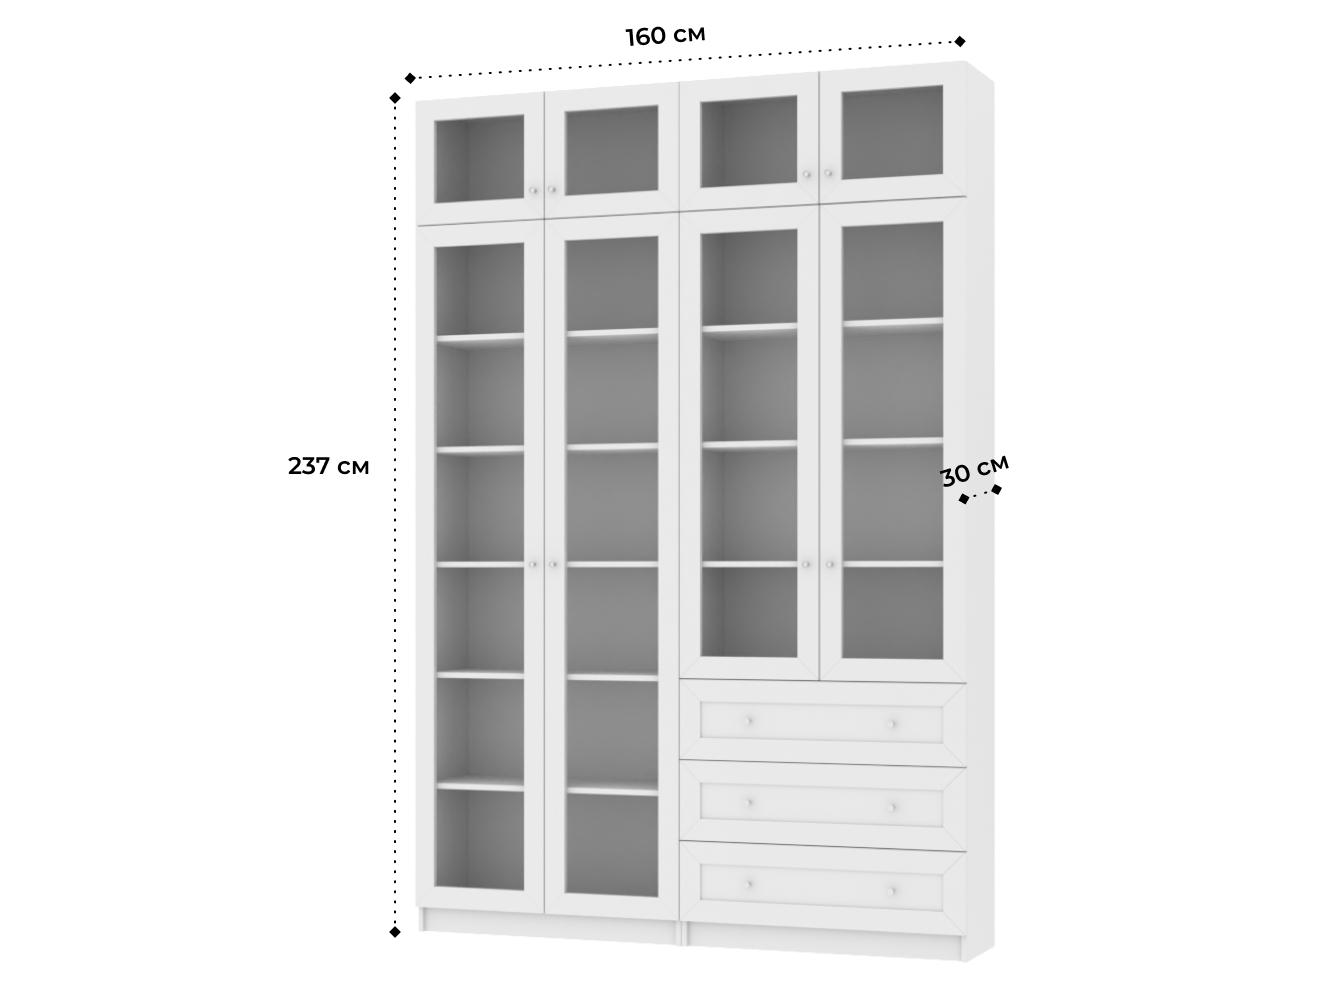  Книжный шкаф Билли 47 white ИКЕА (IKEA) изображение товара